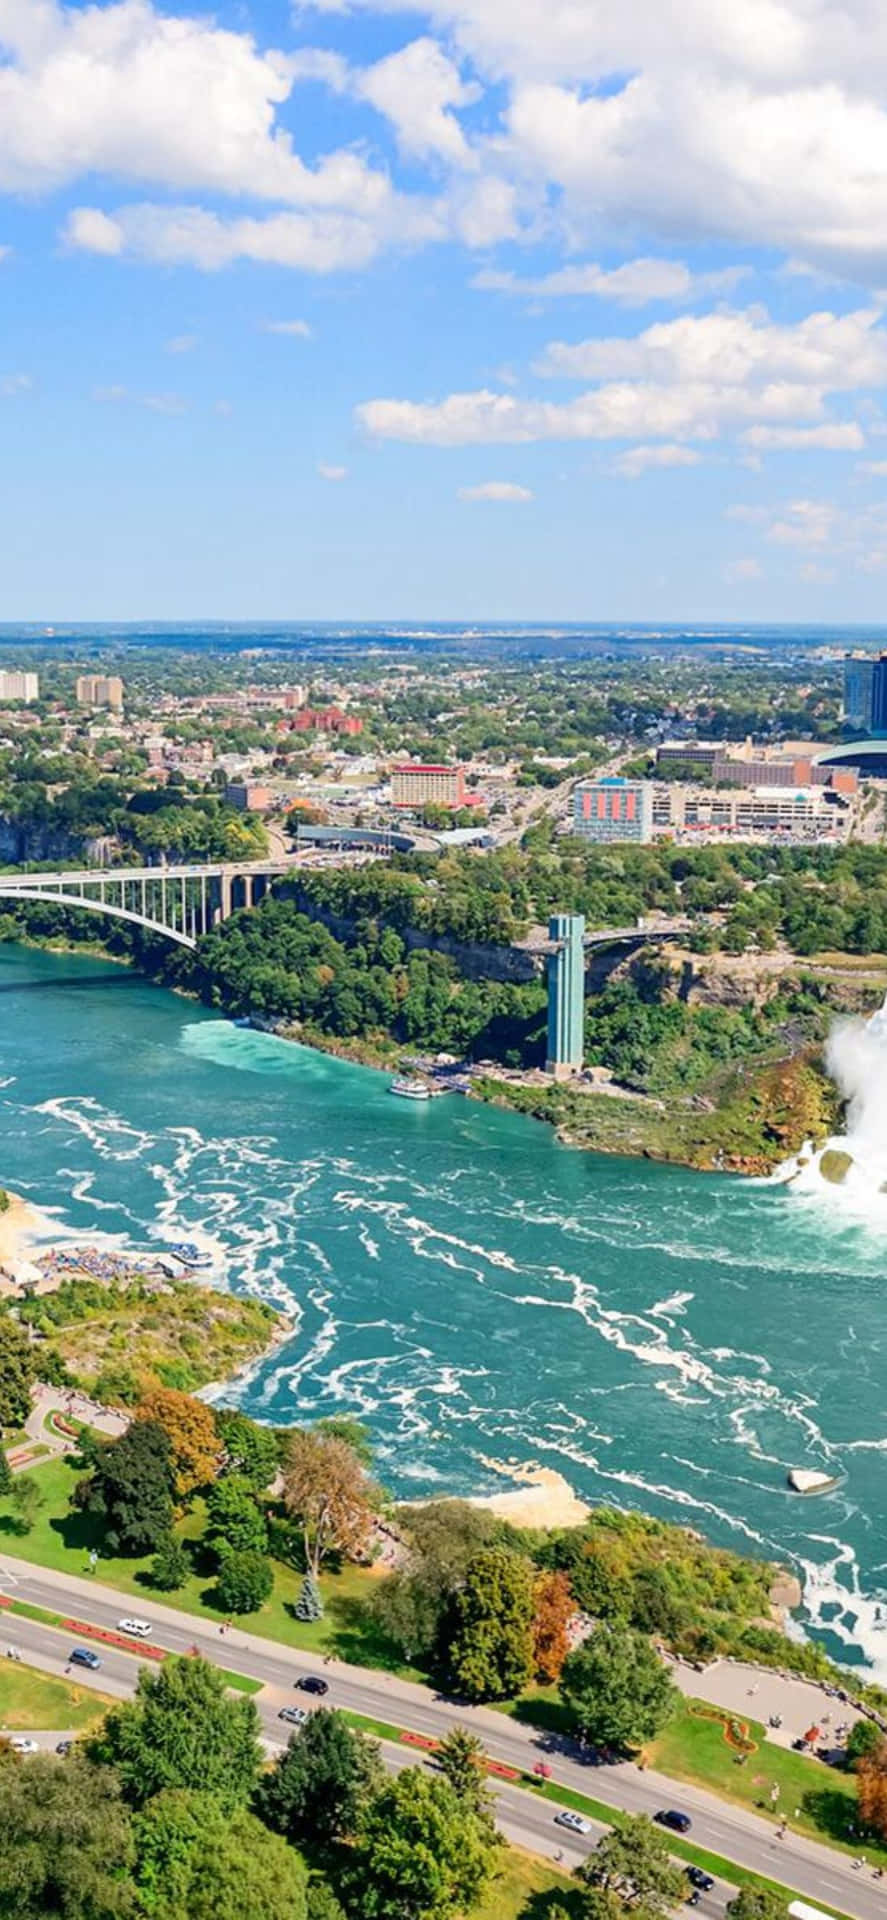 iPhone X Niagara Falls River Background